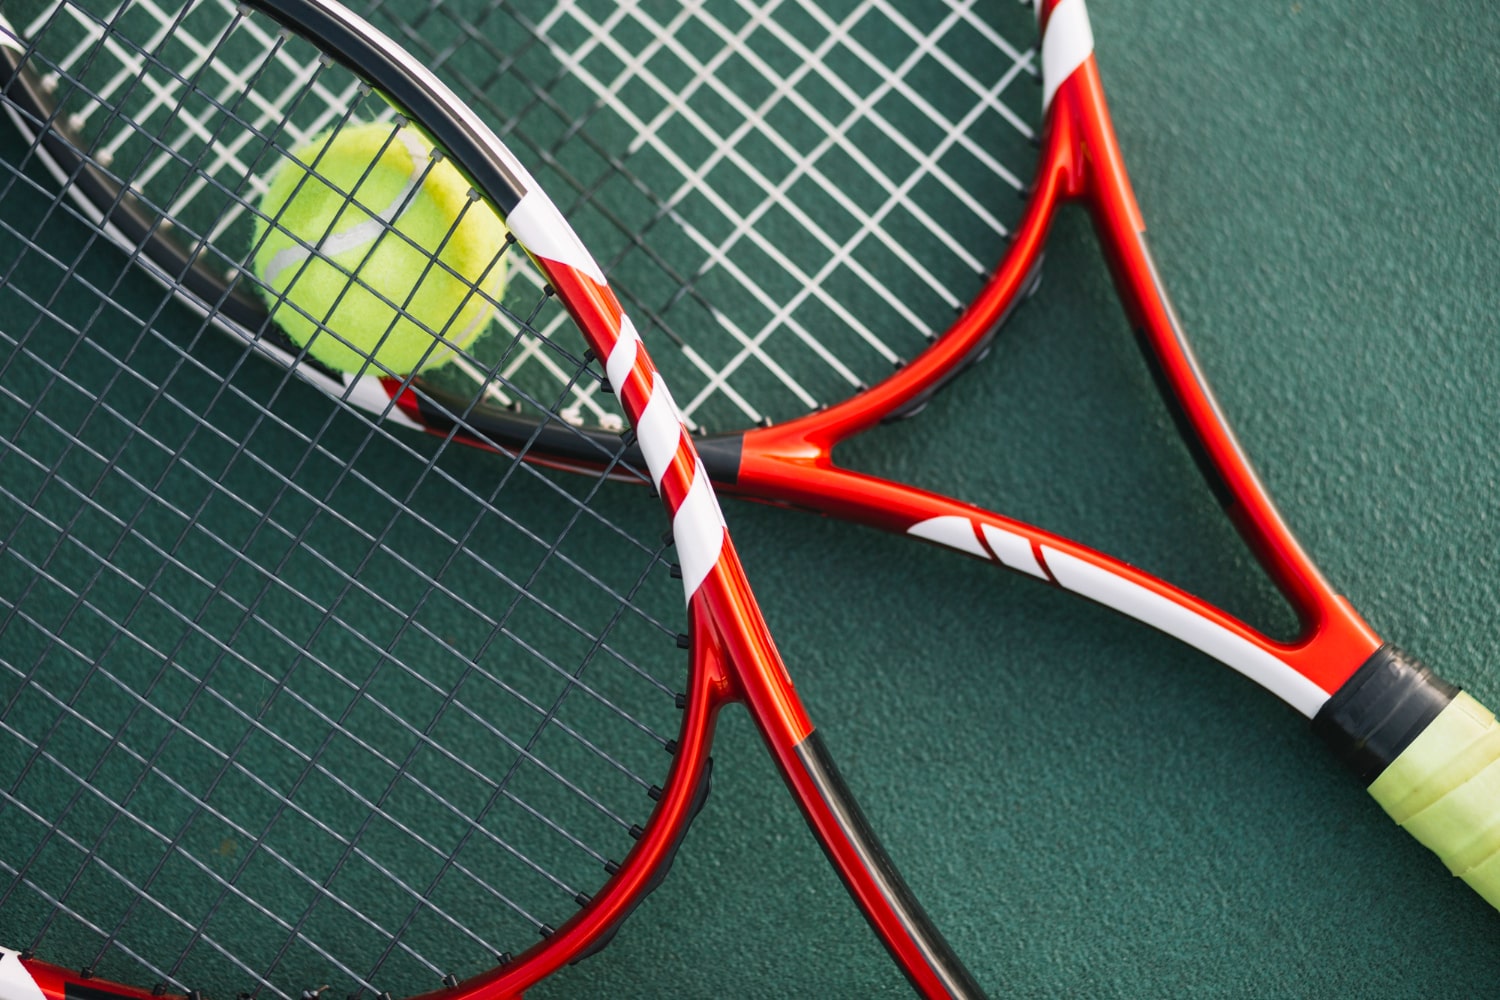 Racchette da tennis, analisi dei diversi tipi